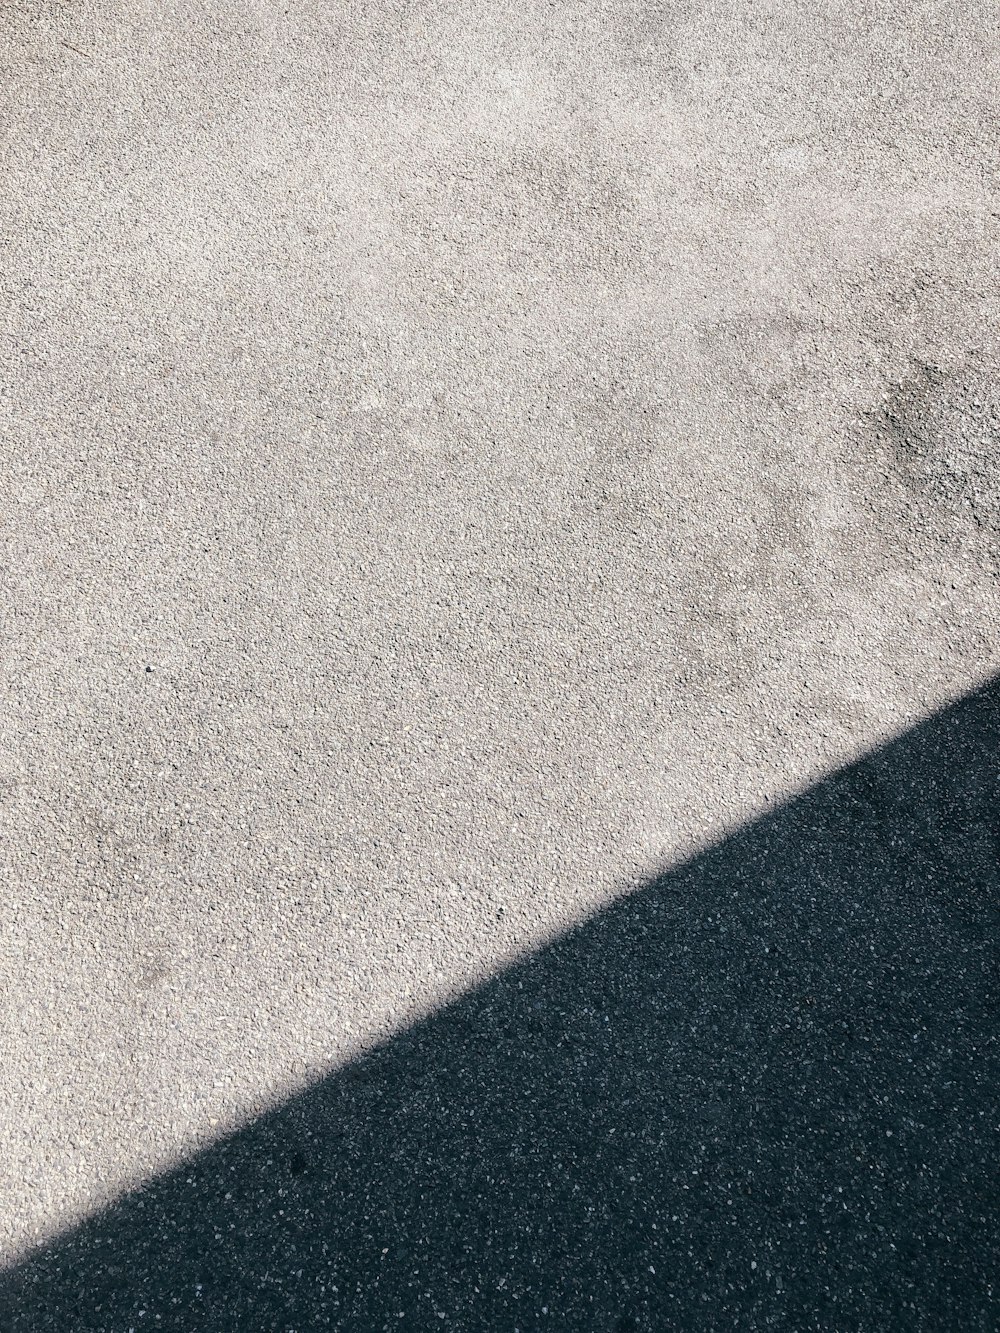 black textile on gray concrete floor